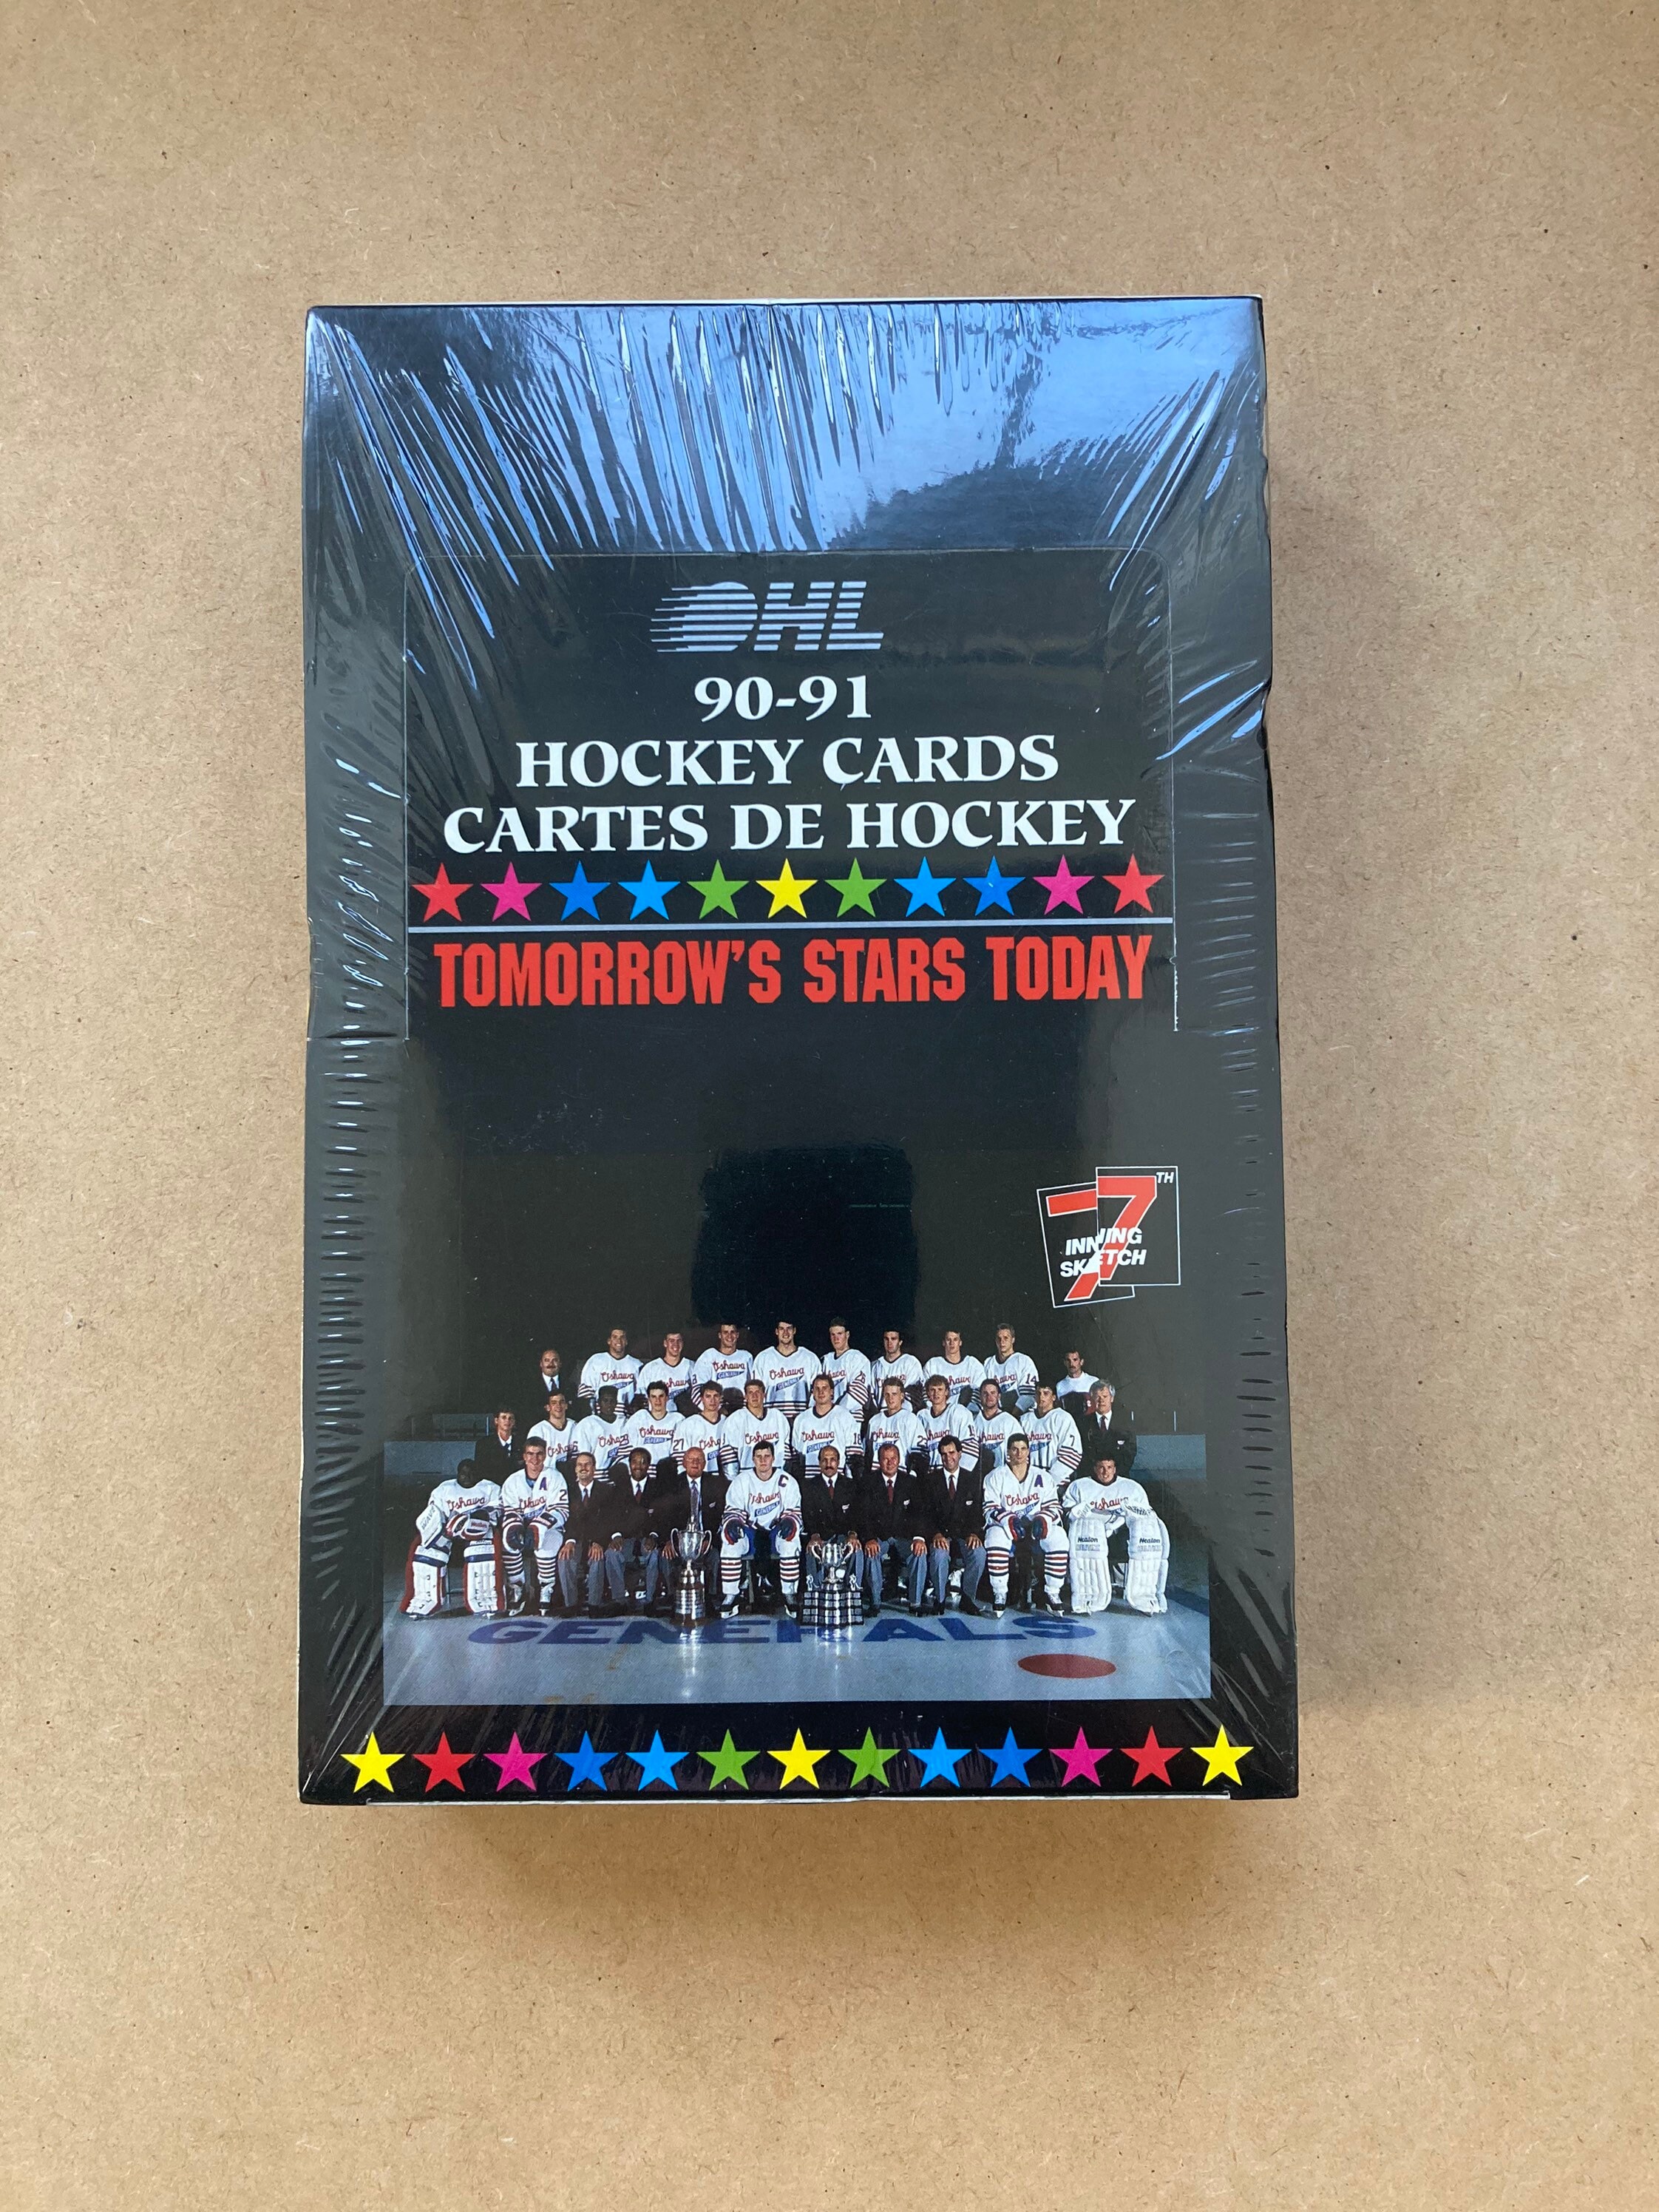 Original Vintage Hockey Cards Score 1991 NHL Pack Of Cards Unopened Pack of  Cards 90s Plastic Pack 1980s 1990s Nostalgic